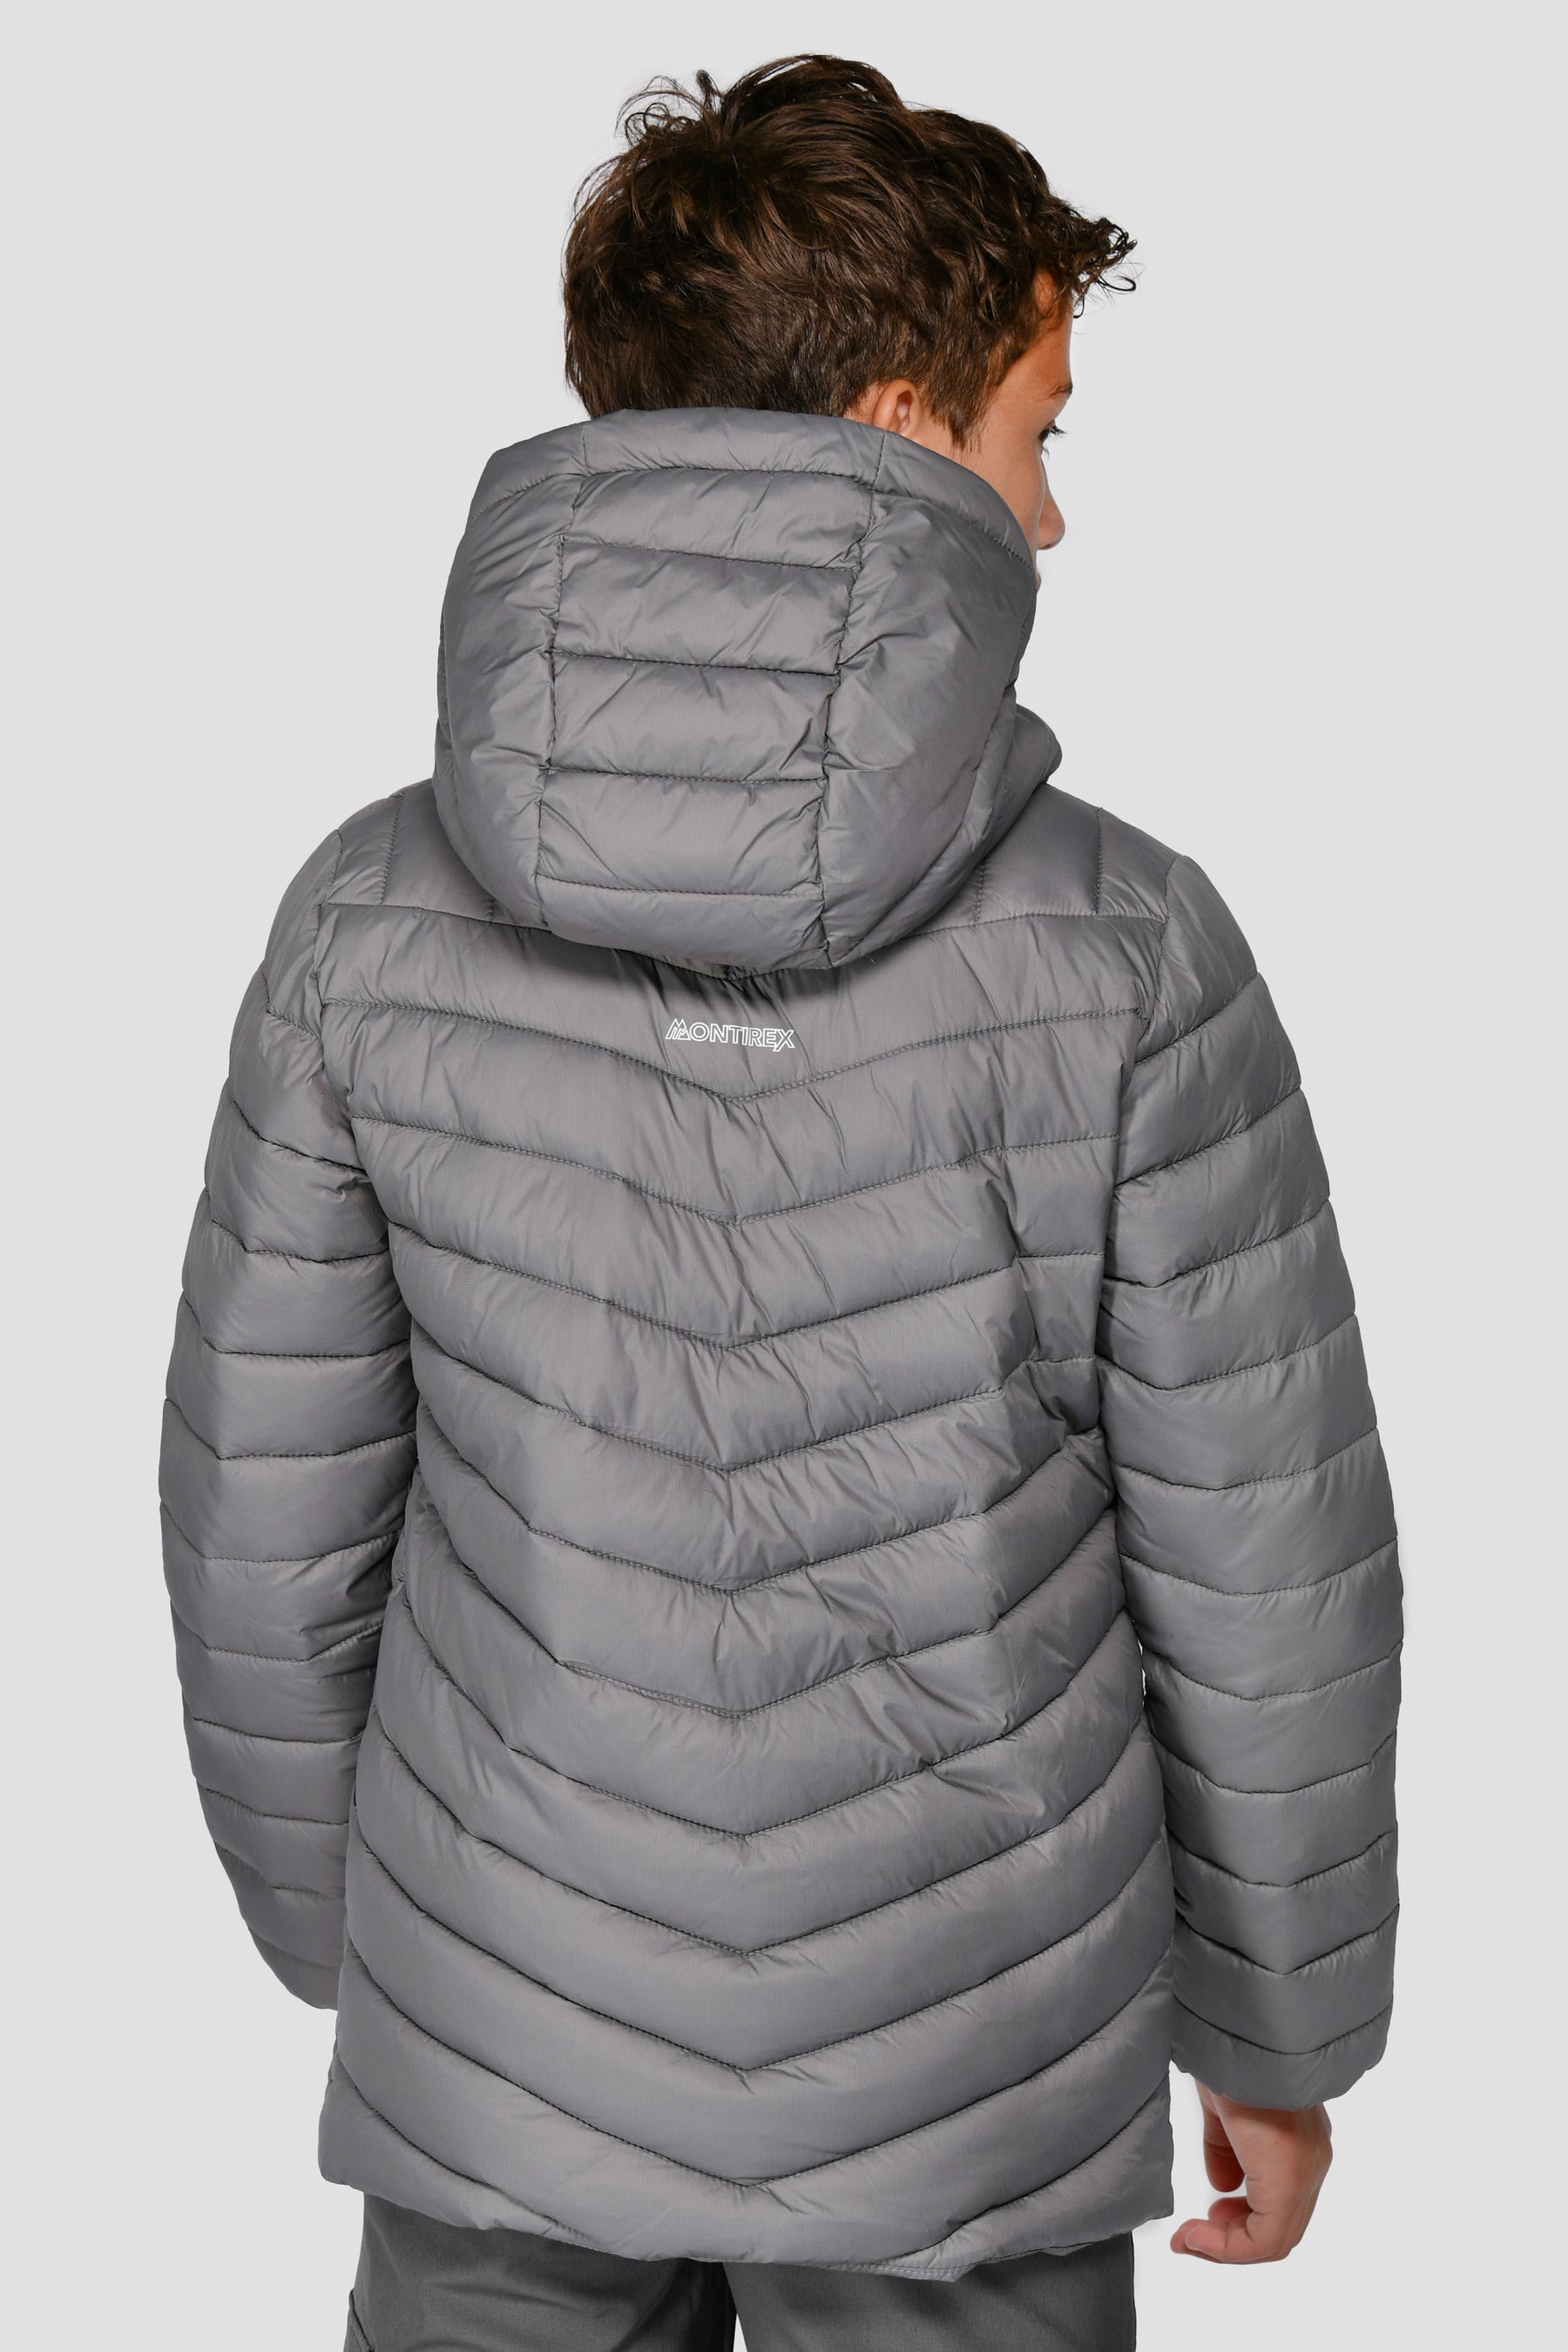 Junior Avalanche Jacket - Cement Grey